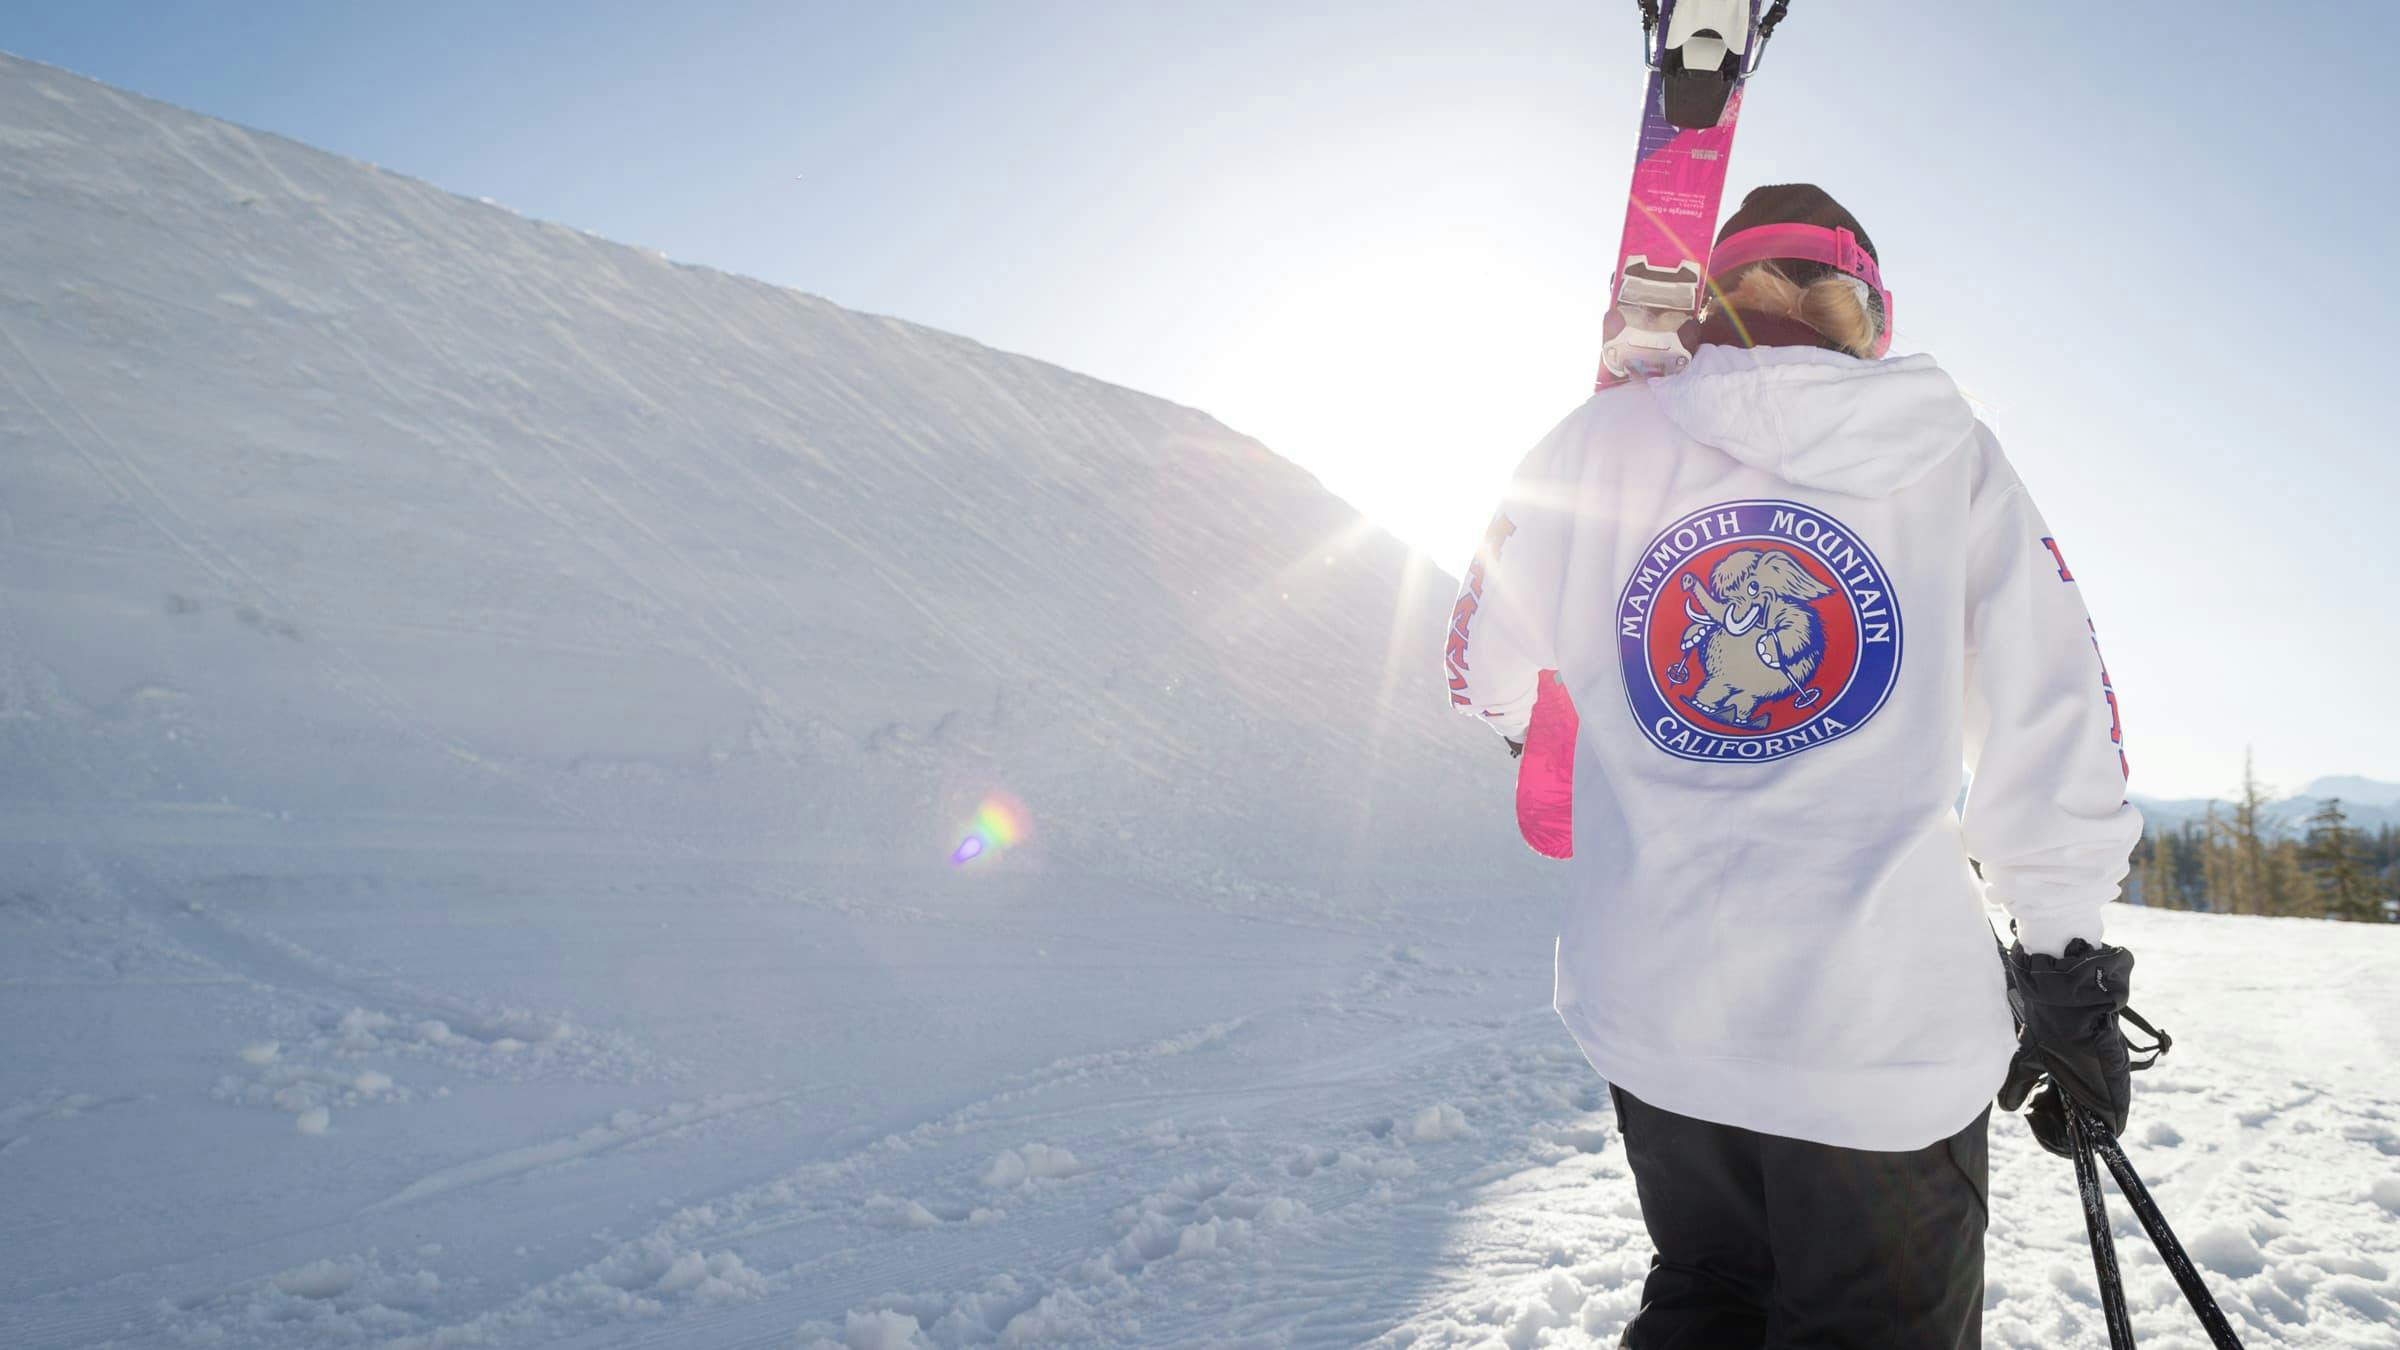 Girl skier wearing the Mammoth Woolly Ski Sweatshirt